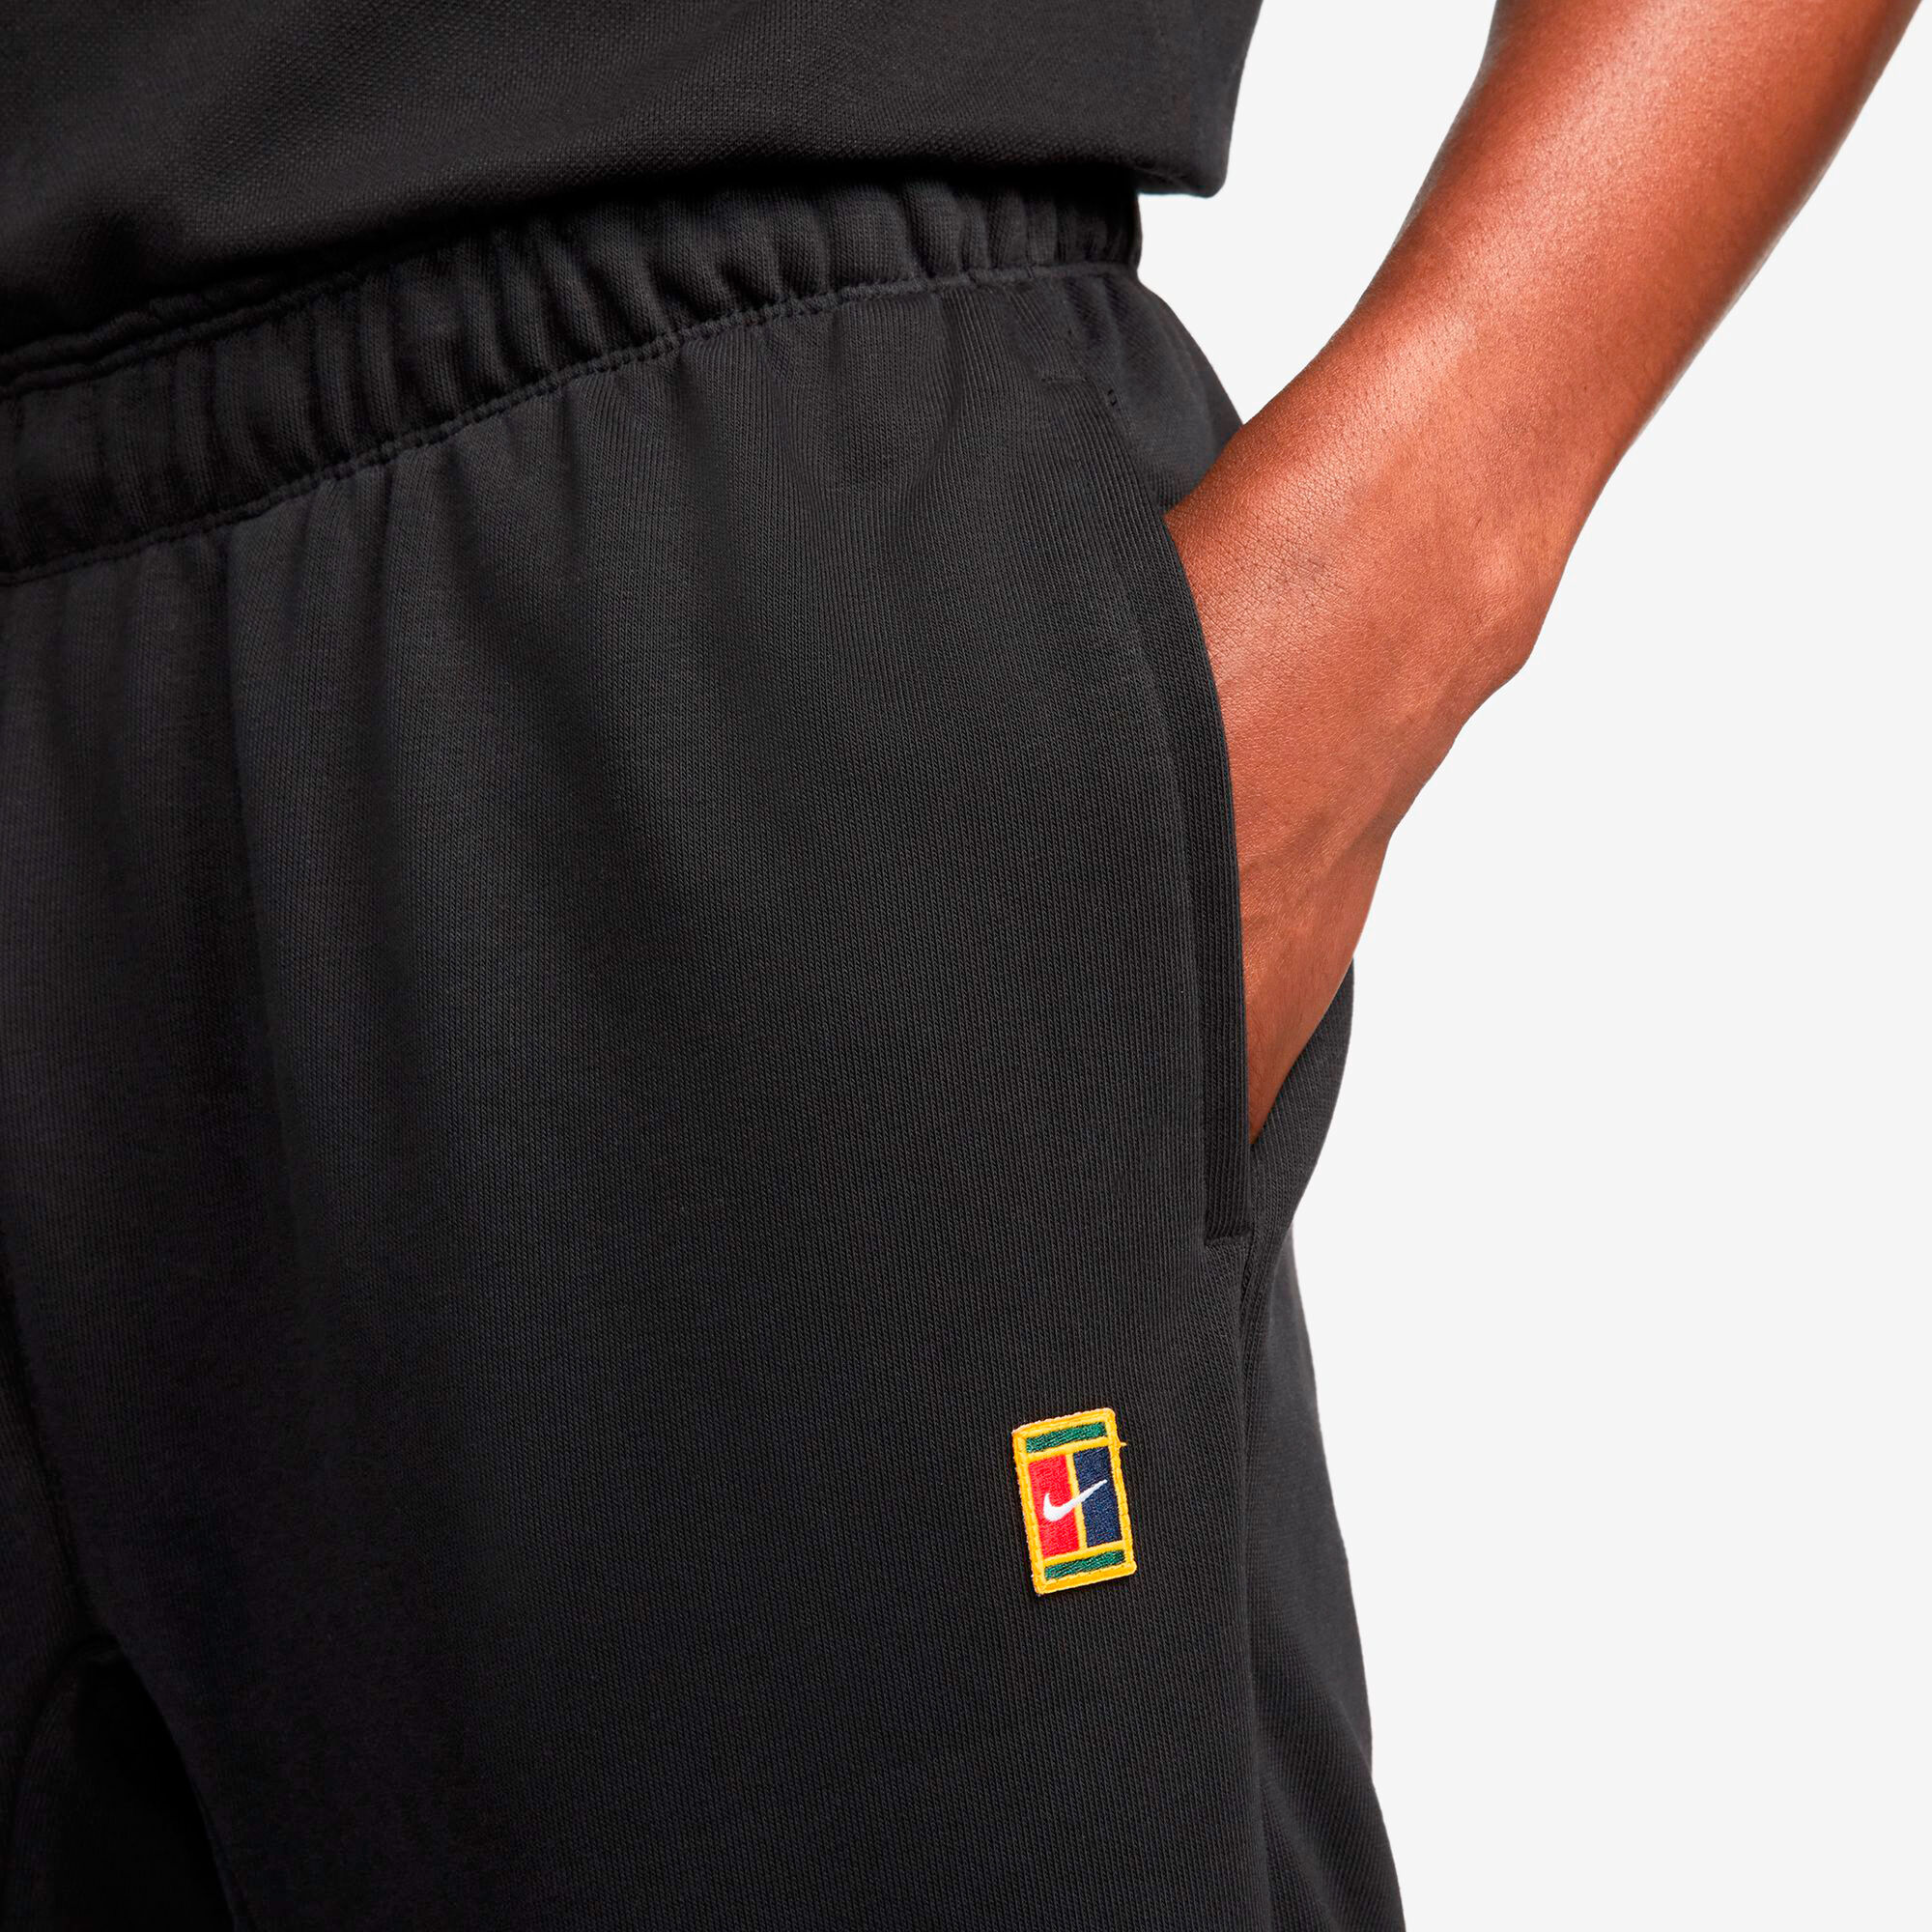 Buy Nike Court Dri Fit Heritage Training Pants Men Black online